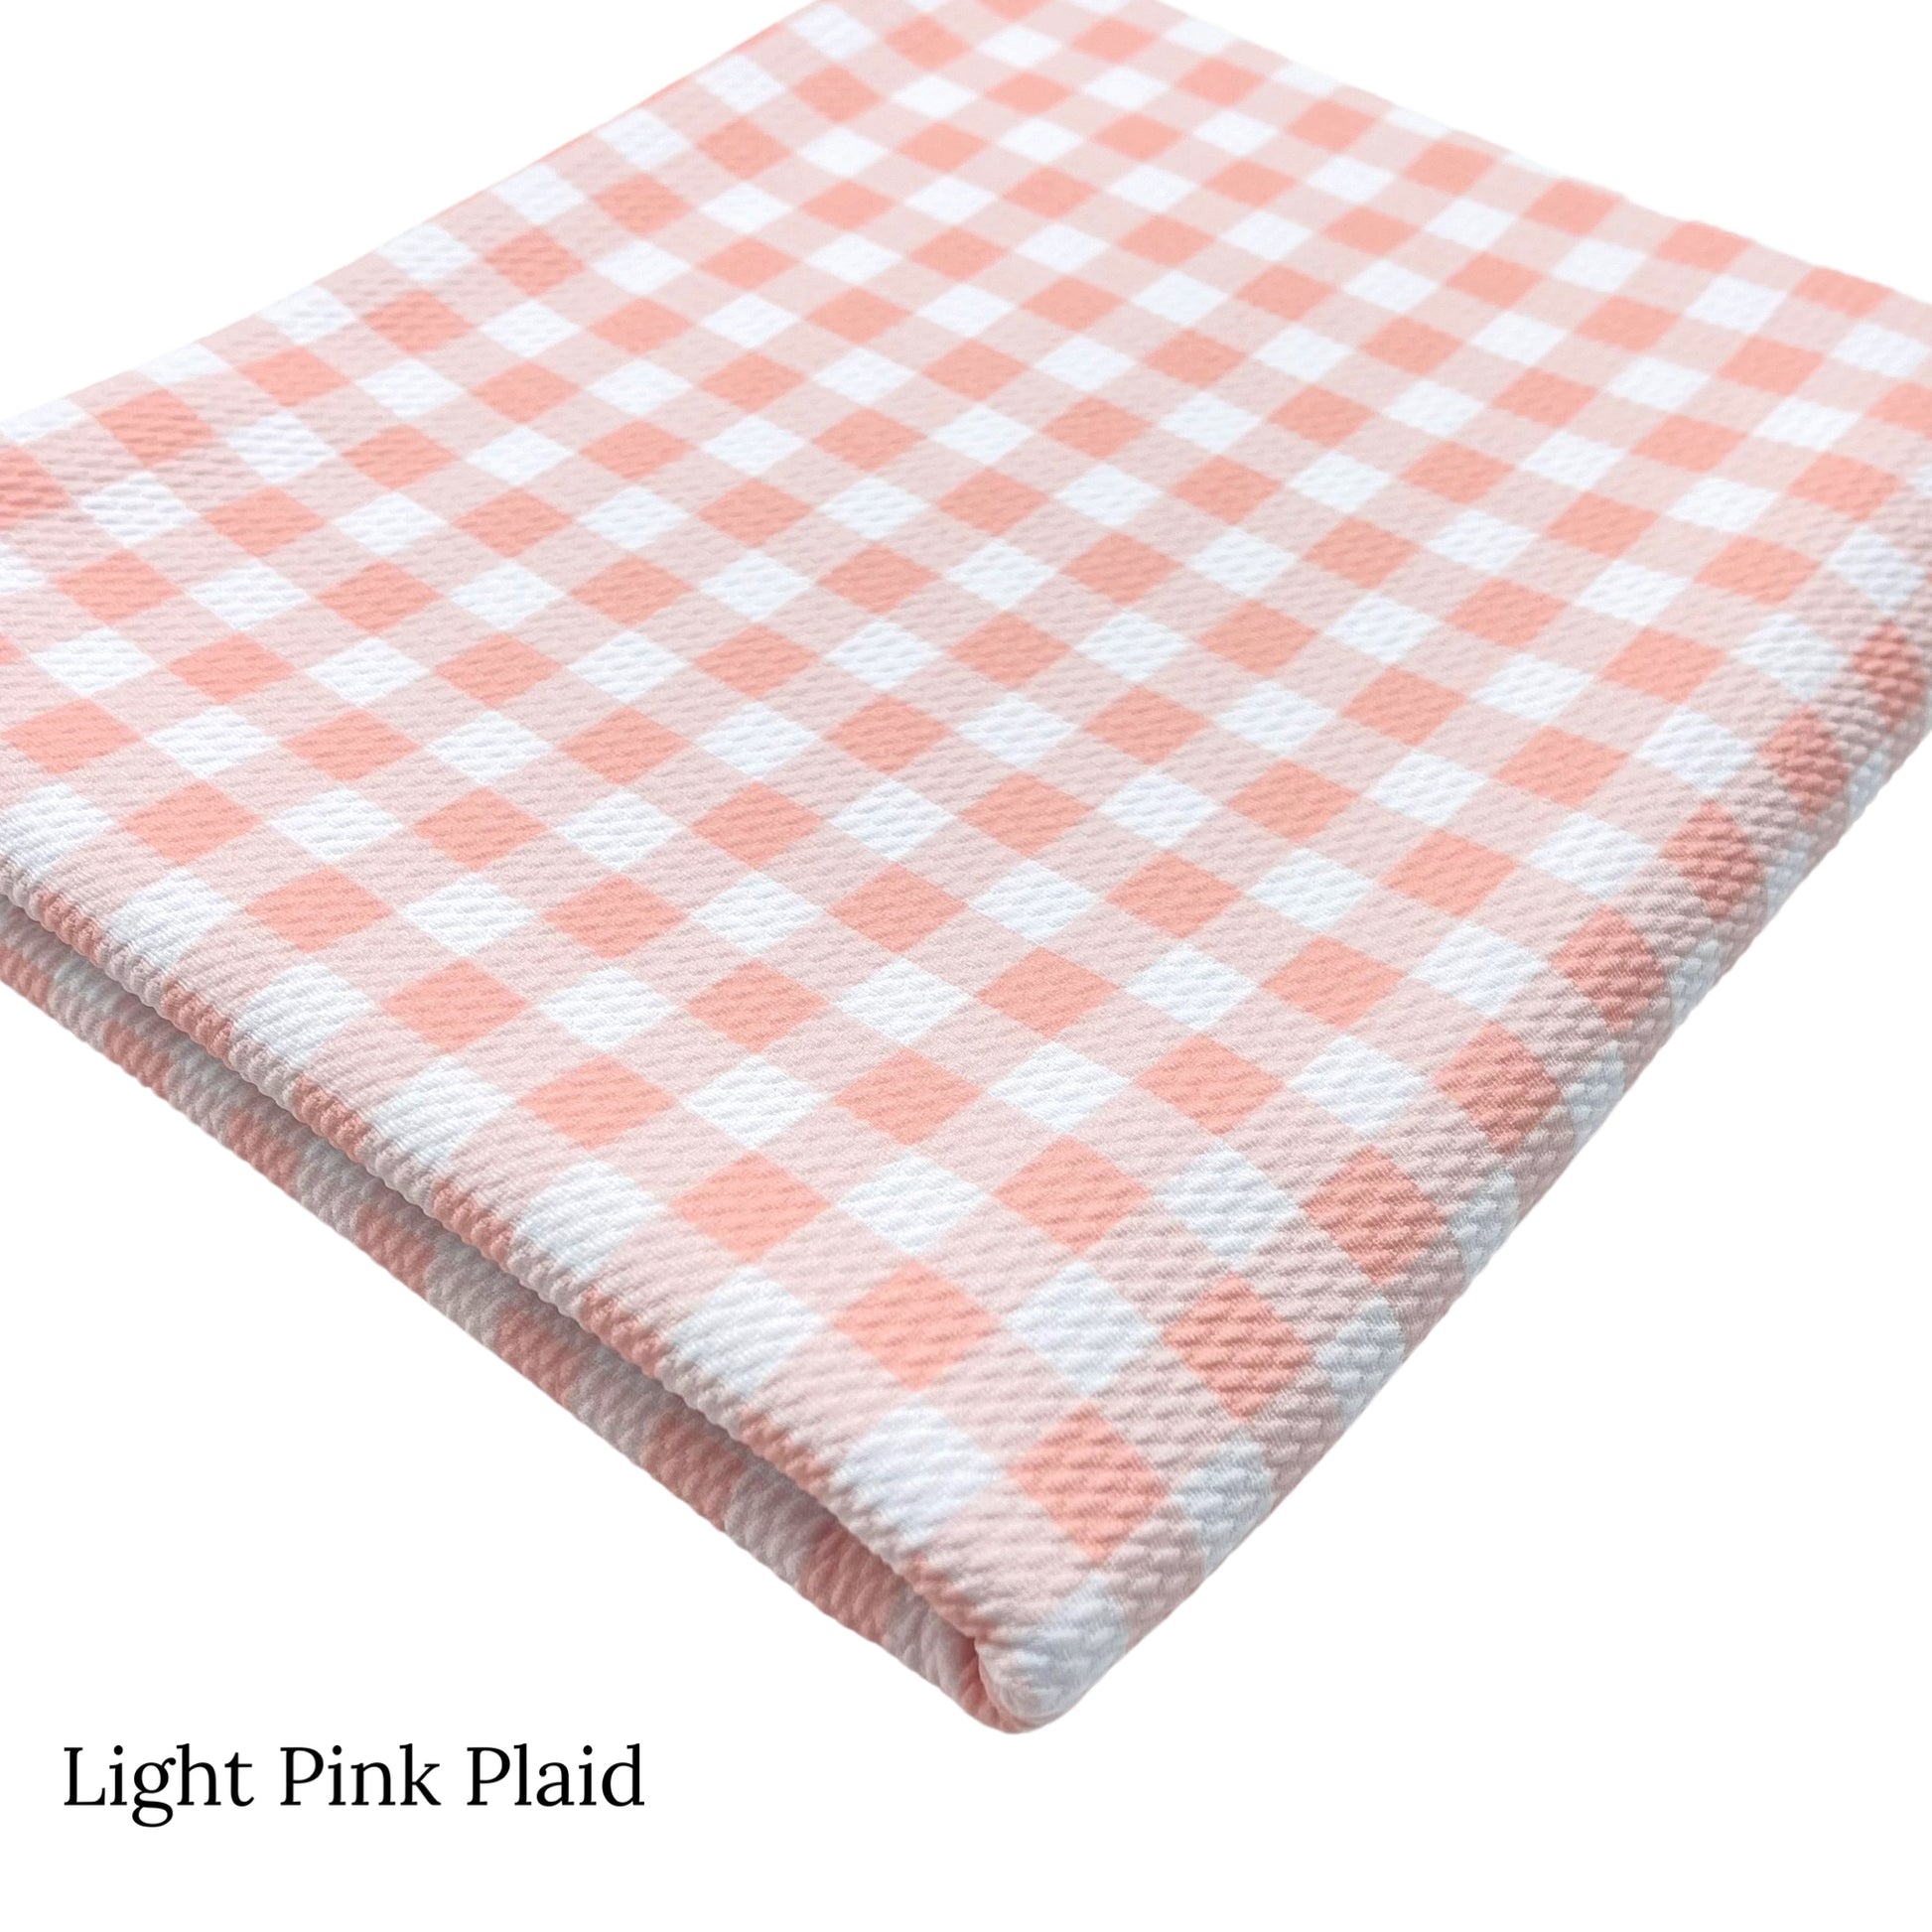 Spring meadow pattern liverpool bullet fabrics. Light pink plaid print liverpool bullet fabric.